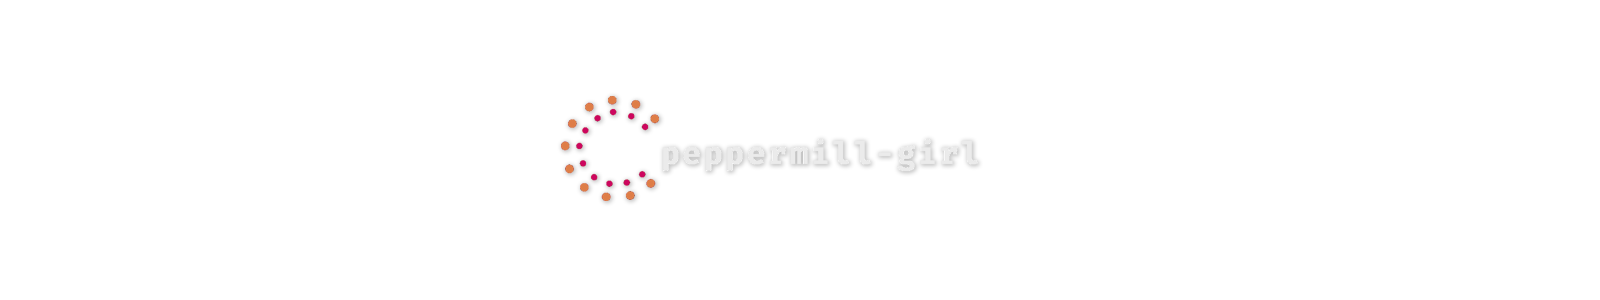 peppermill-girl